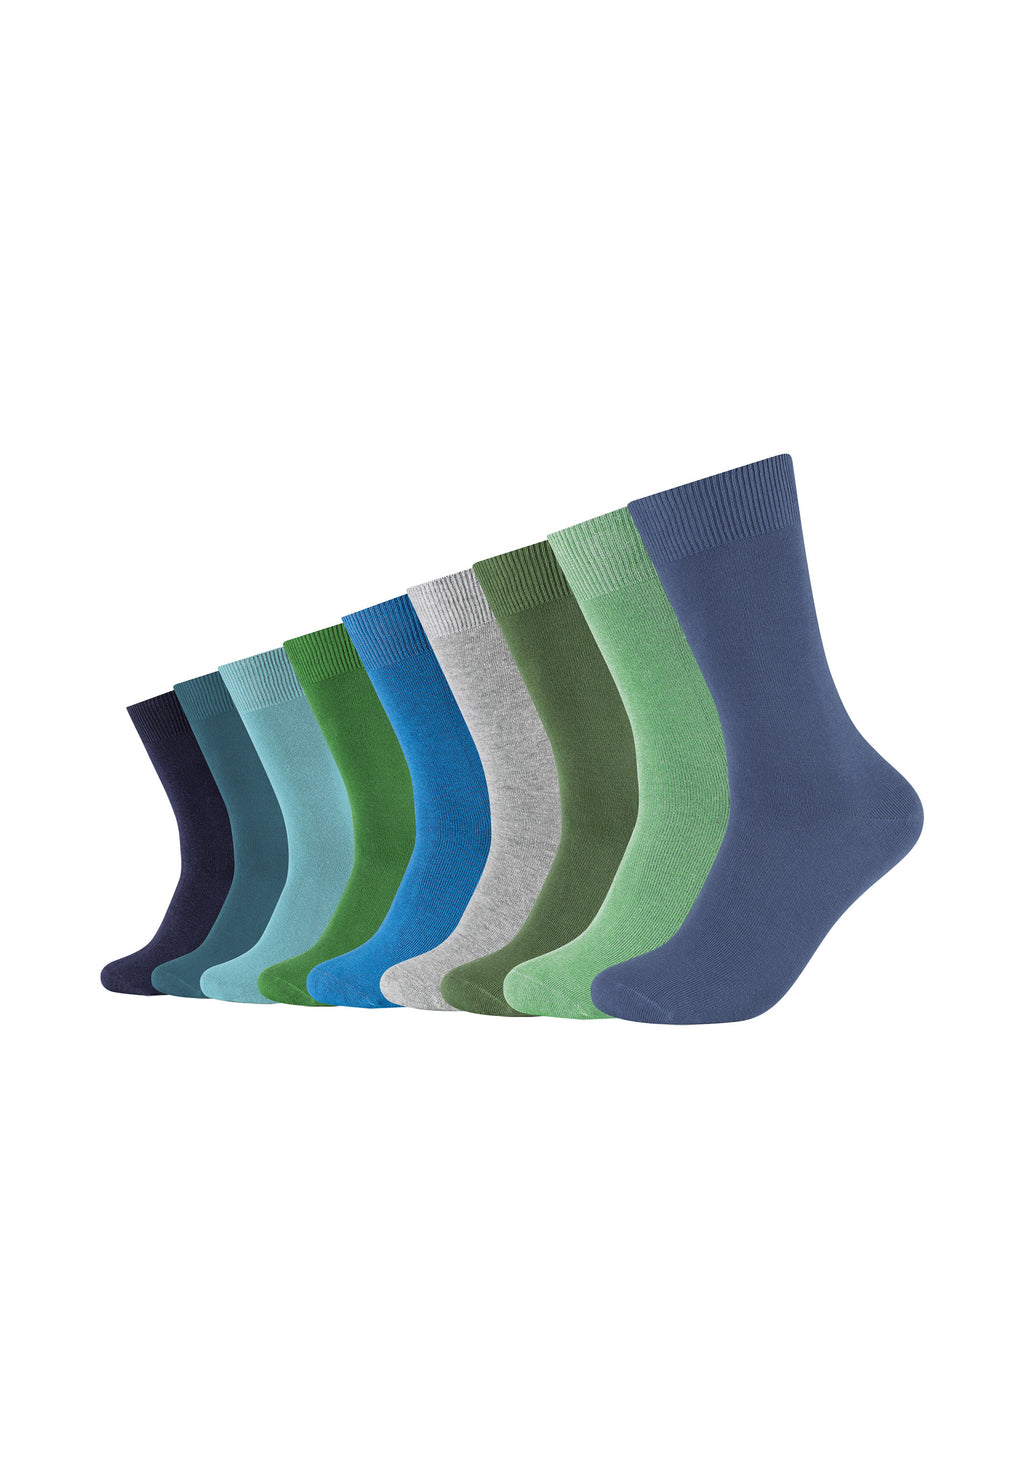 Socken 9er Pack – Bio-Baumwolle ONSKINERY comfort mit